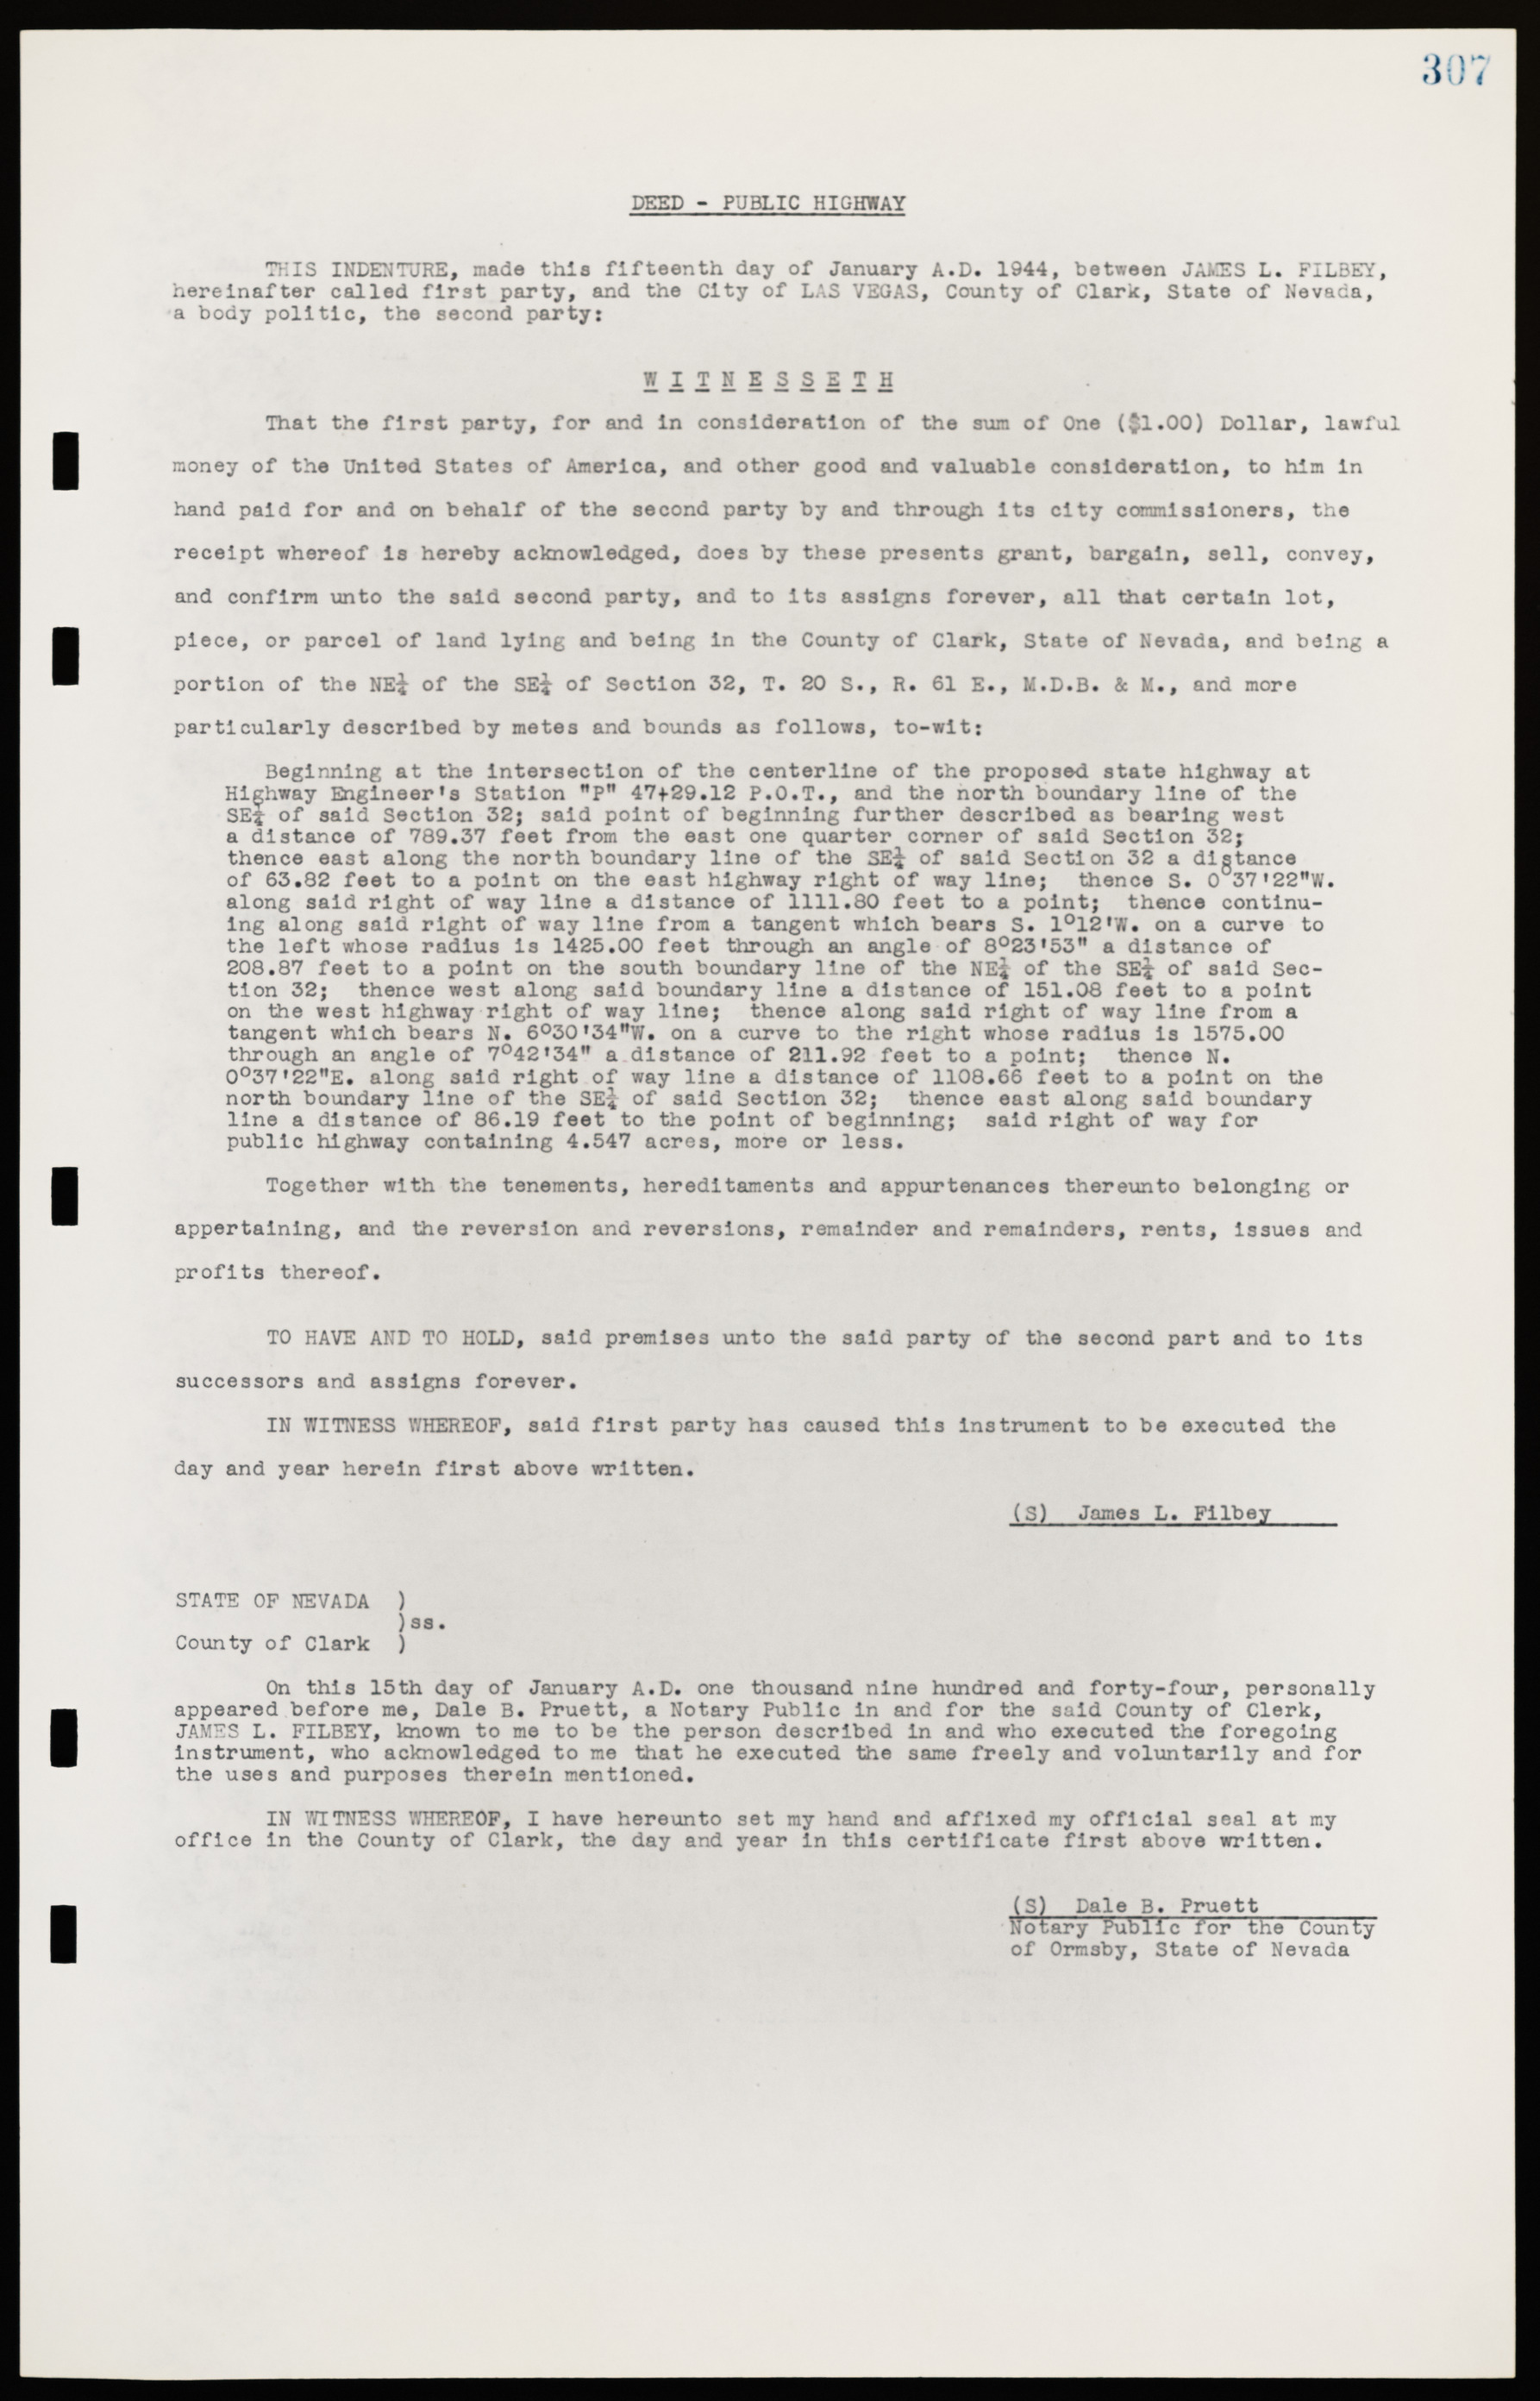 Las Vegas City Commission Legal Documents, February 29, 1944 to February 21, 1945, lvc000016-70